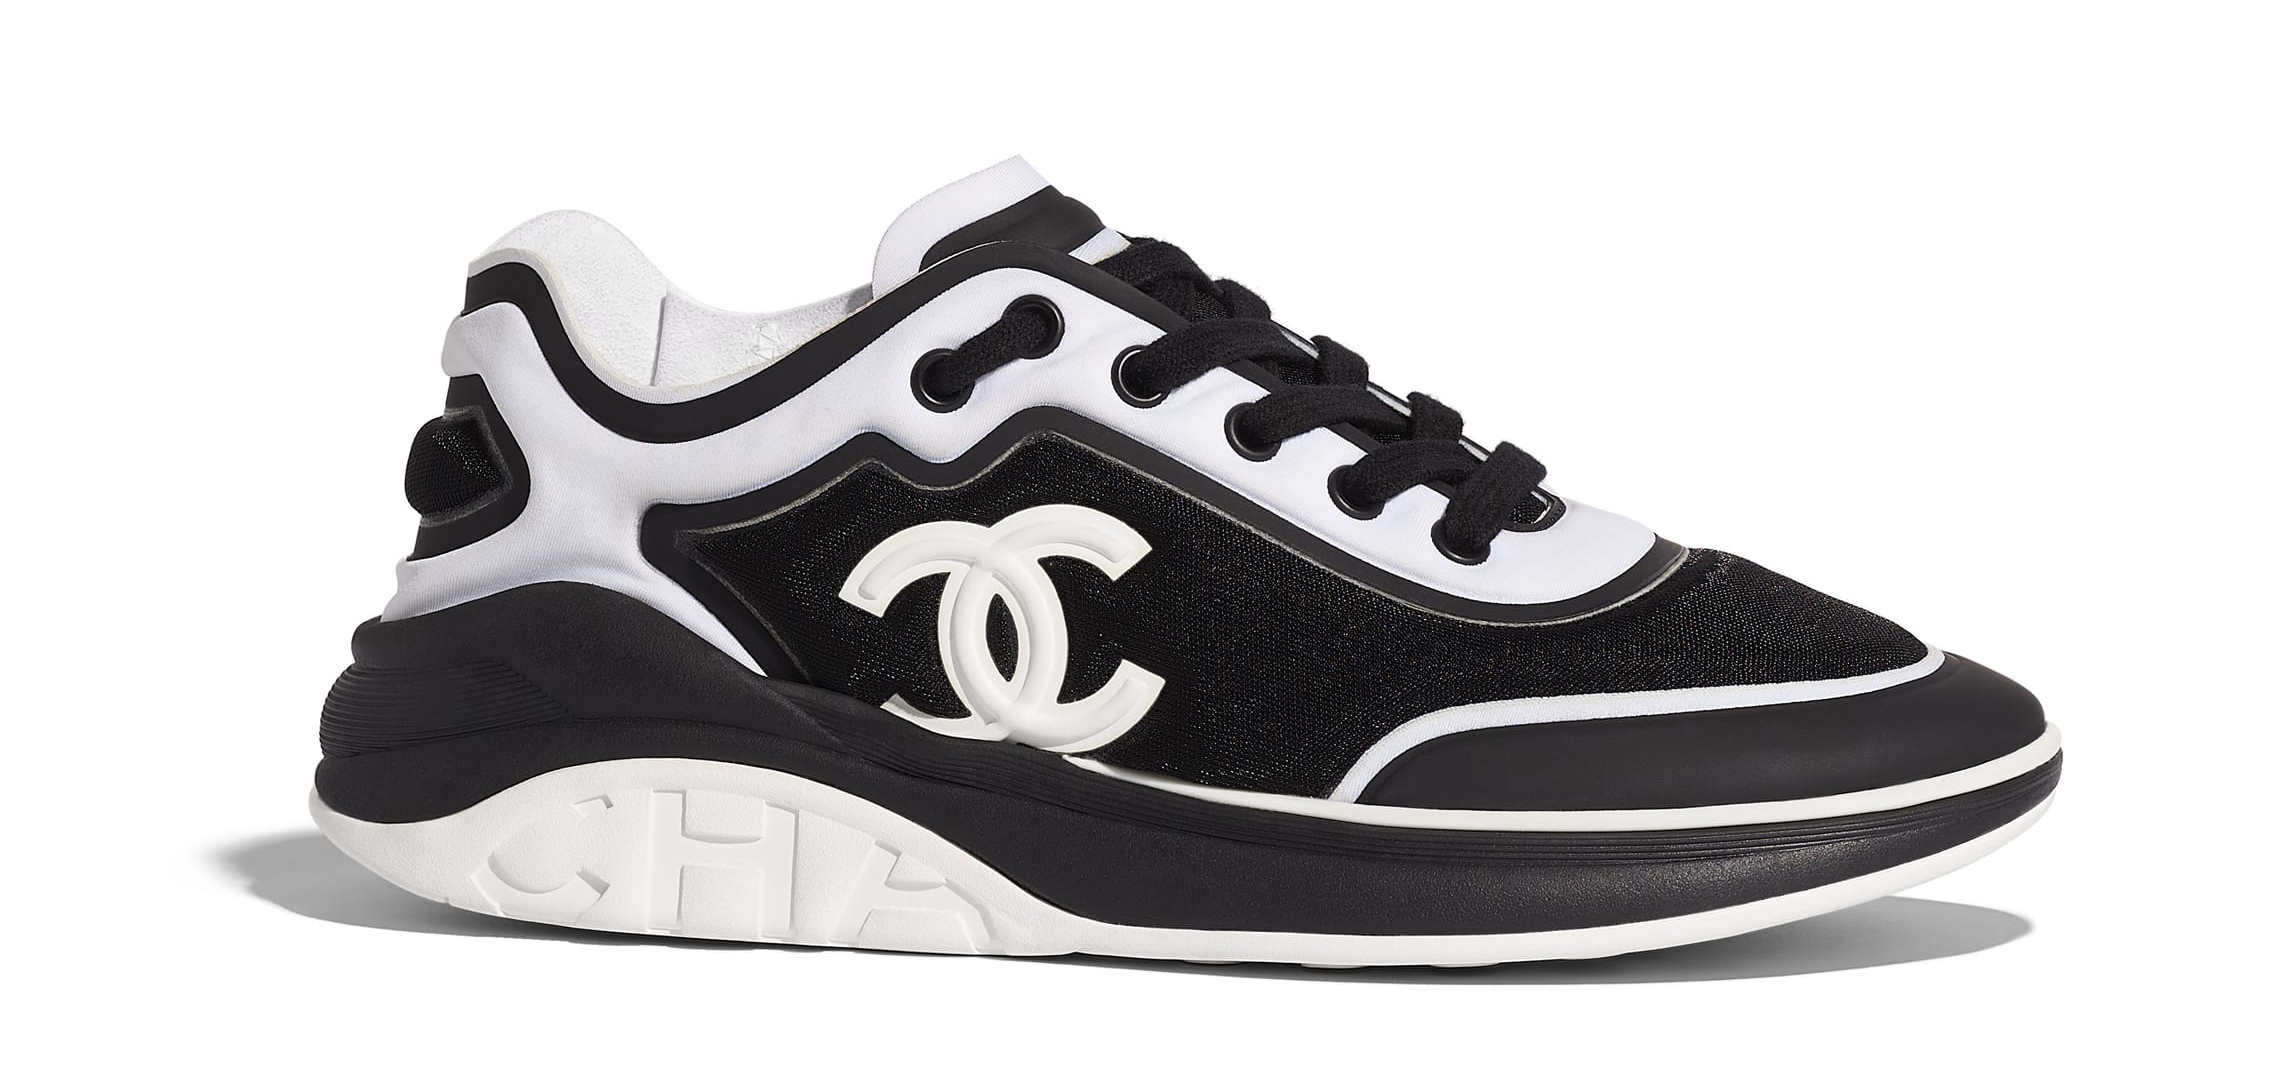 CHANEL  Shoes  Chanel Nib Black White Cc Logo Trainers Runner Shoes  Sneakers 39 Eur Size  Poshmark